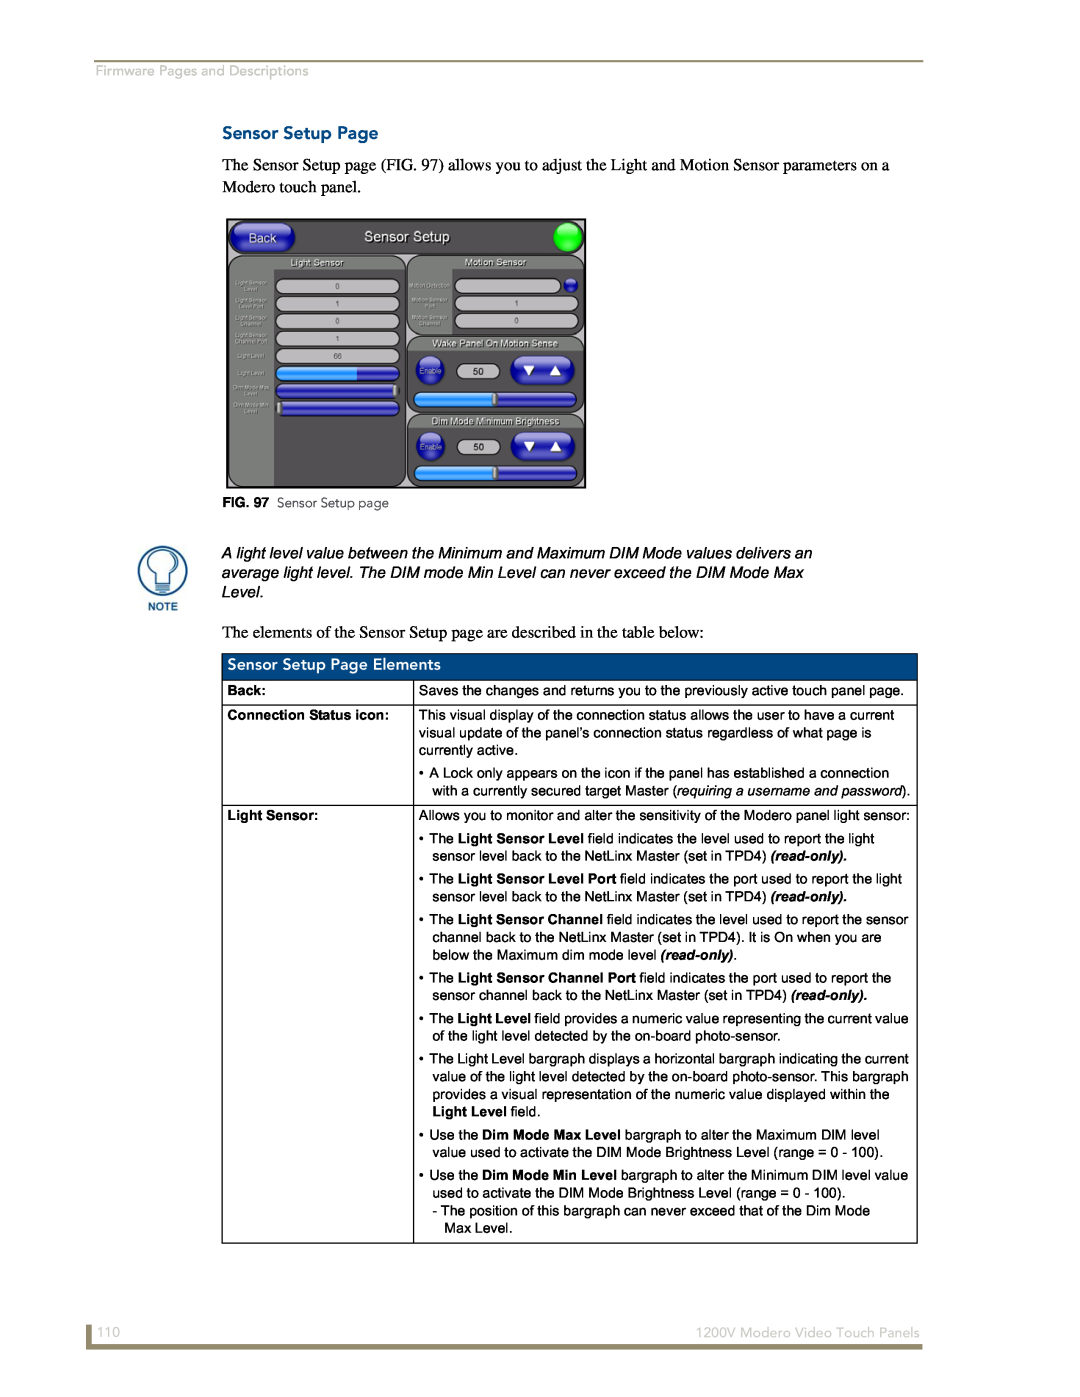 AMX NXT-1200V manual Sensor Setup Page Elements, Firmware Pages and Descriptions, 1200V Modero Video Touch Panels 